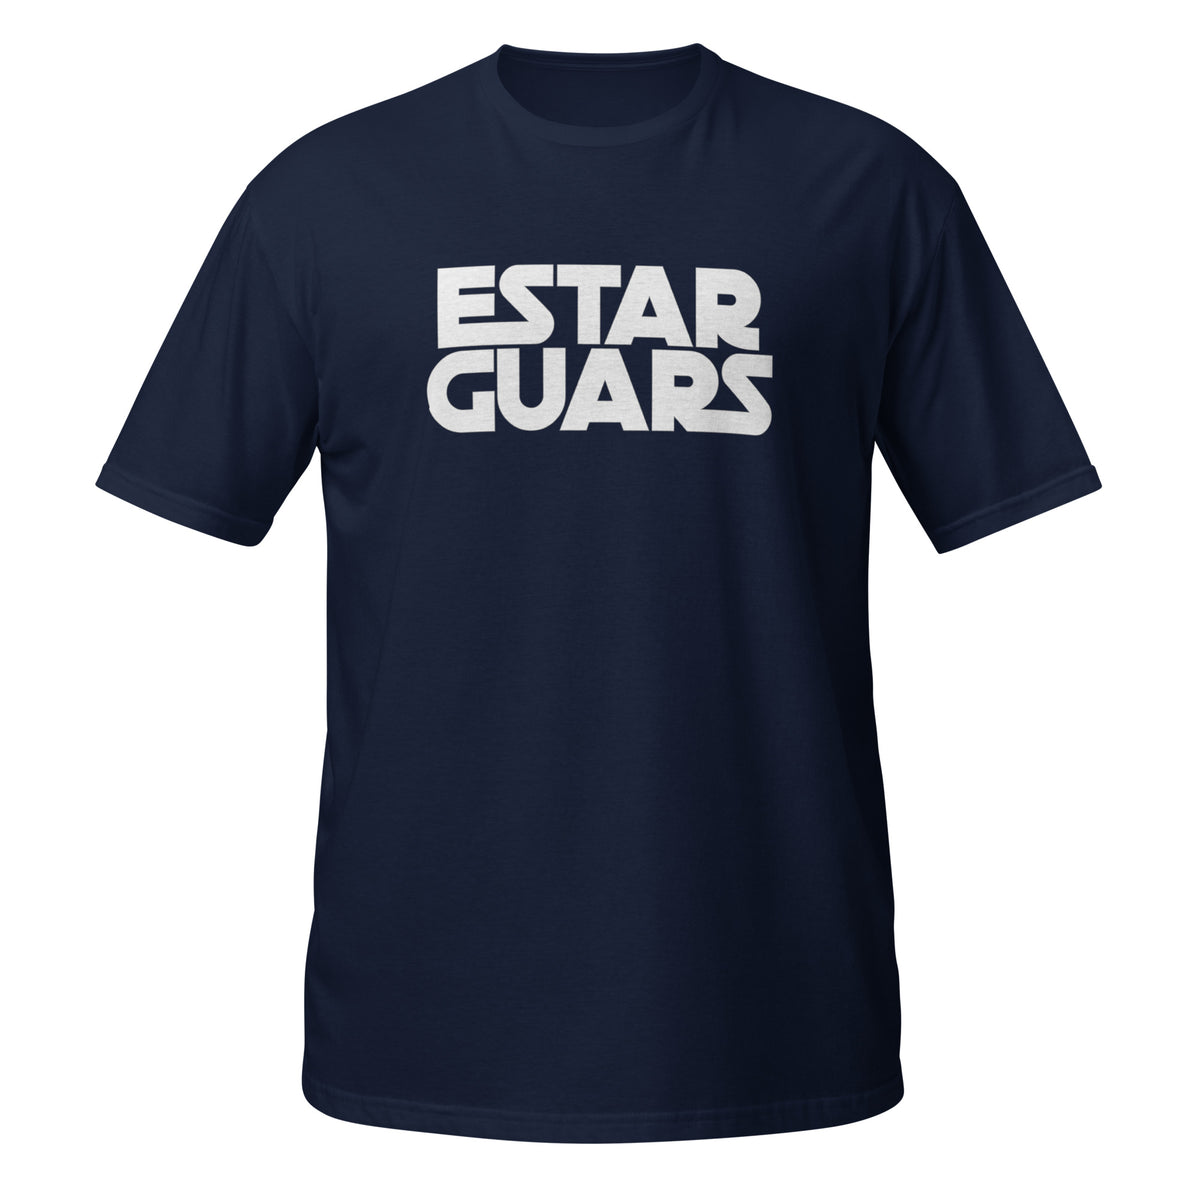 Camiseta Estar Guars (Star Wars)